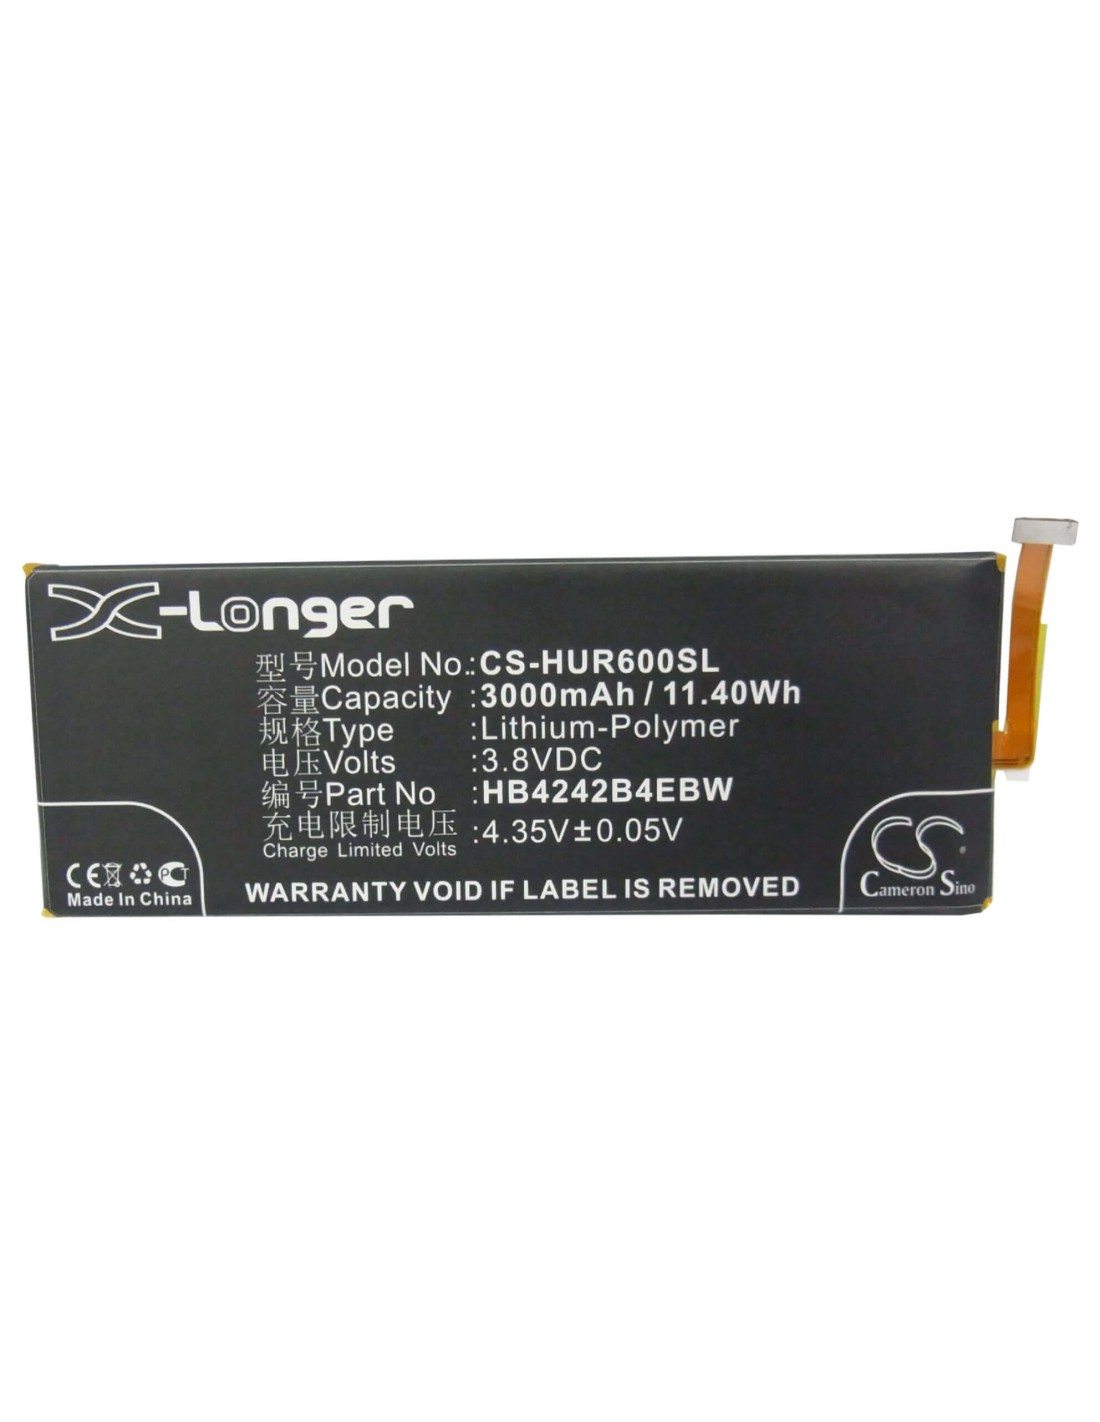 Battery for Huawei Honor 6, H60-L02, Mulan 3.8V, 3000mAh - 11.40Wh